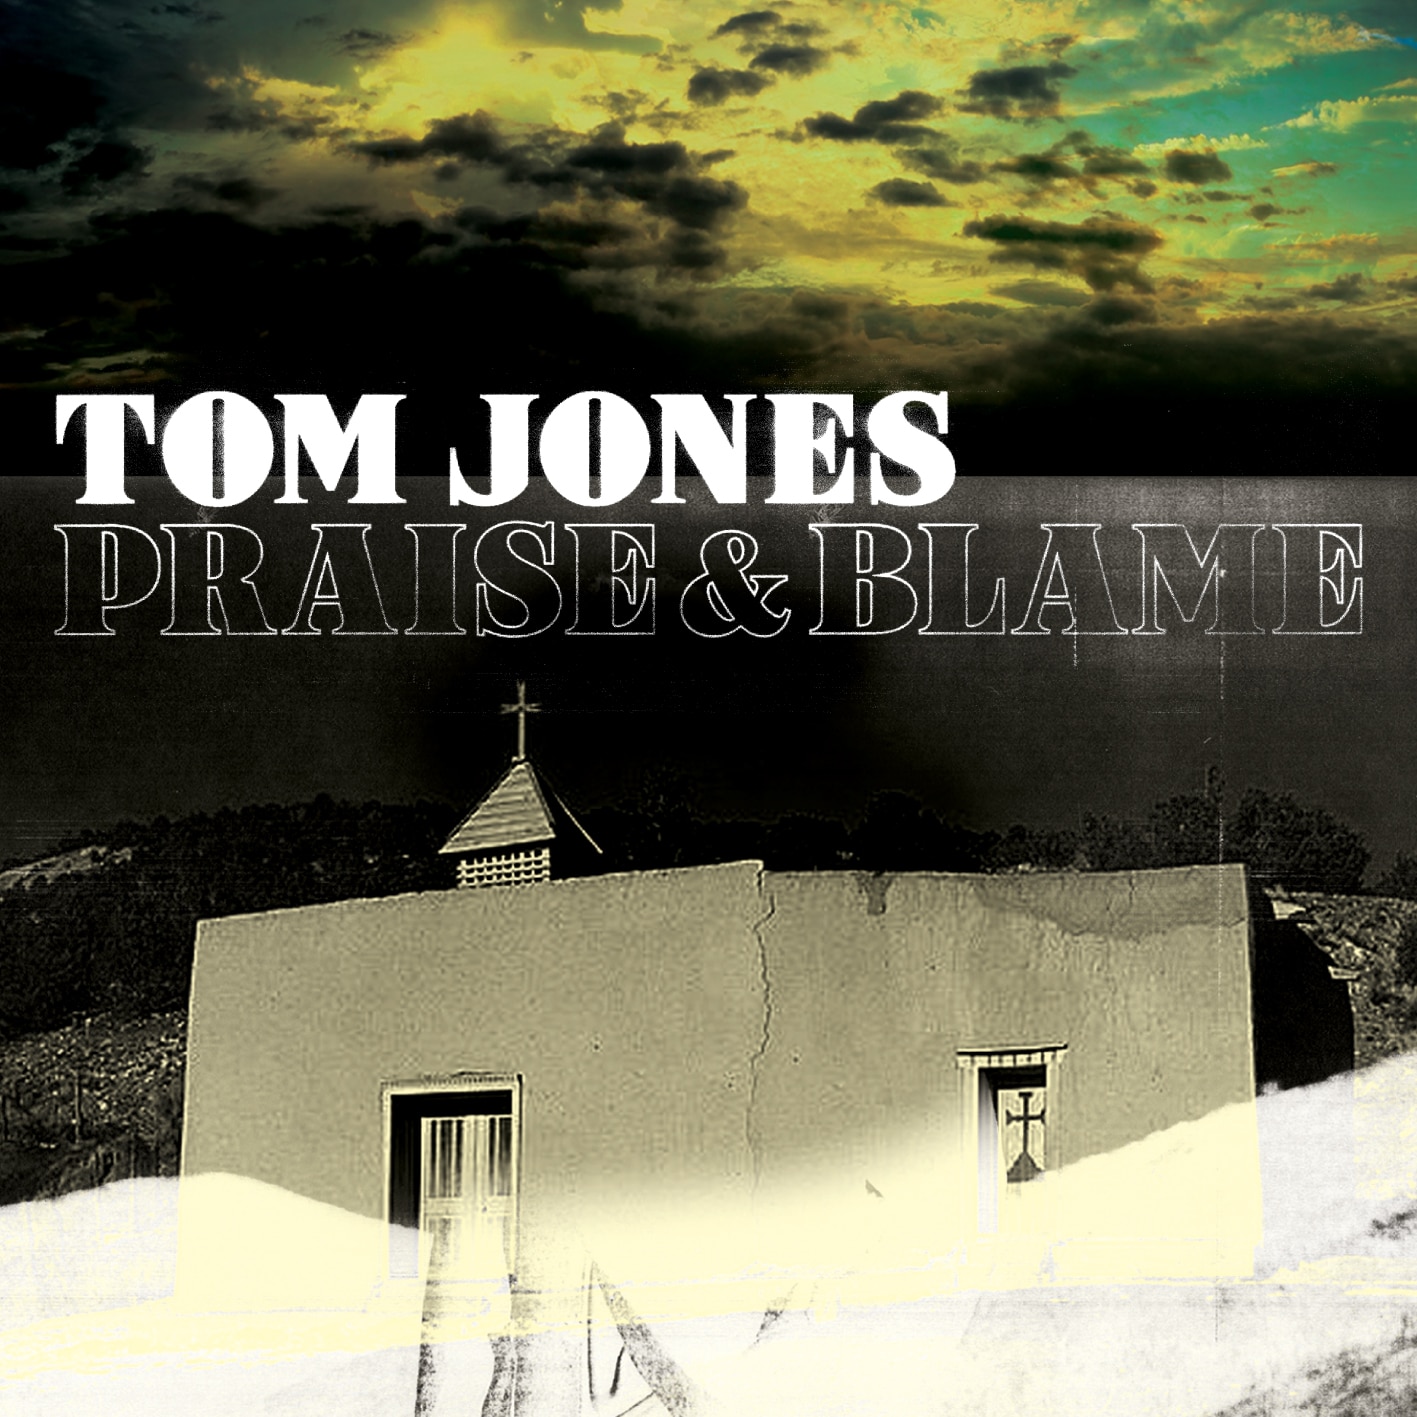 Tom Jones, “Ain’t No Grave”